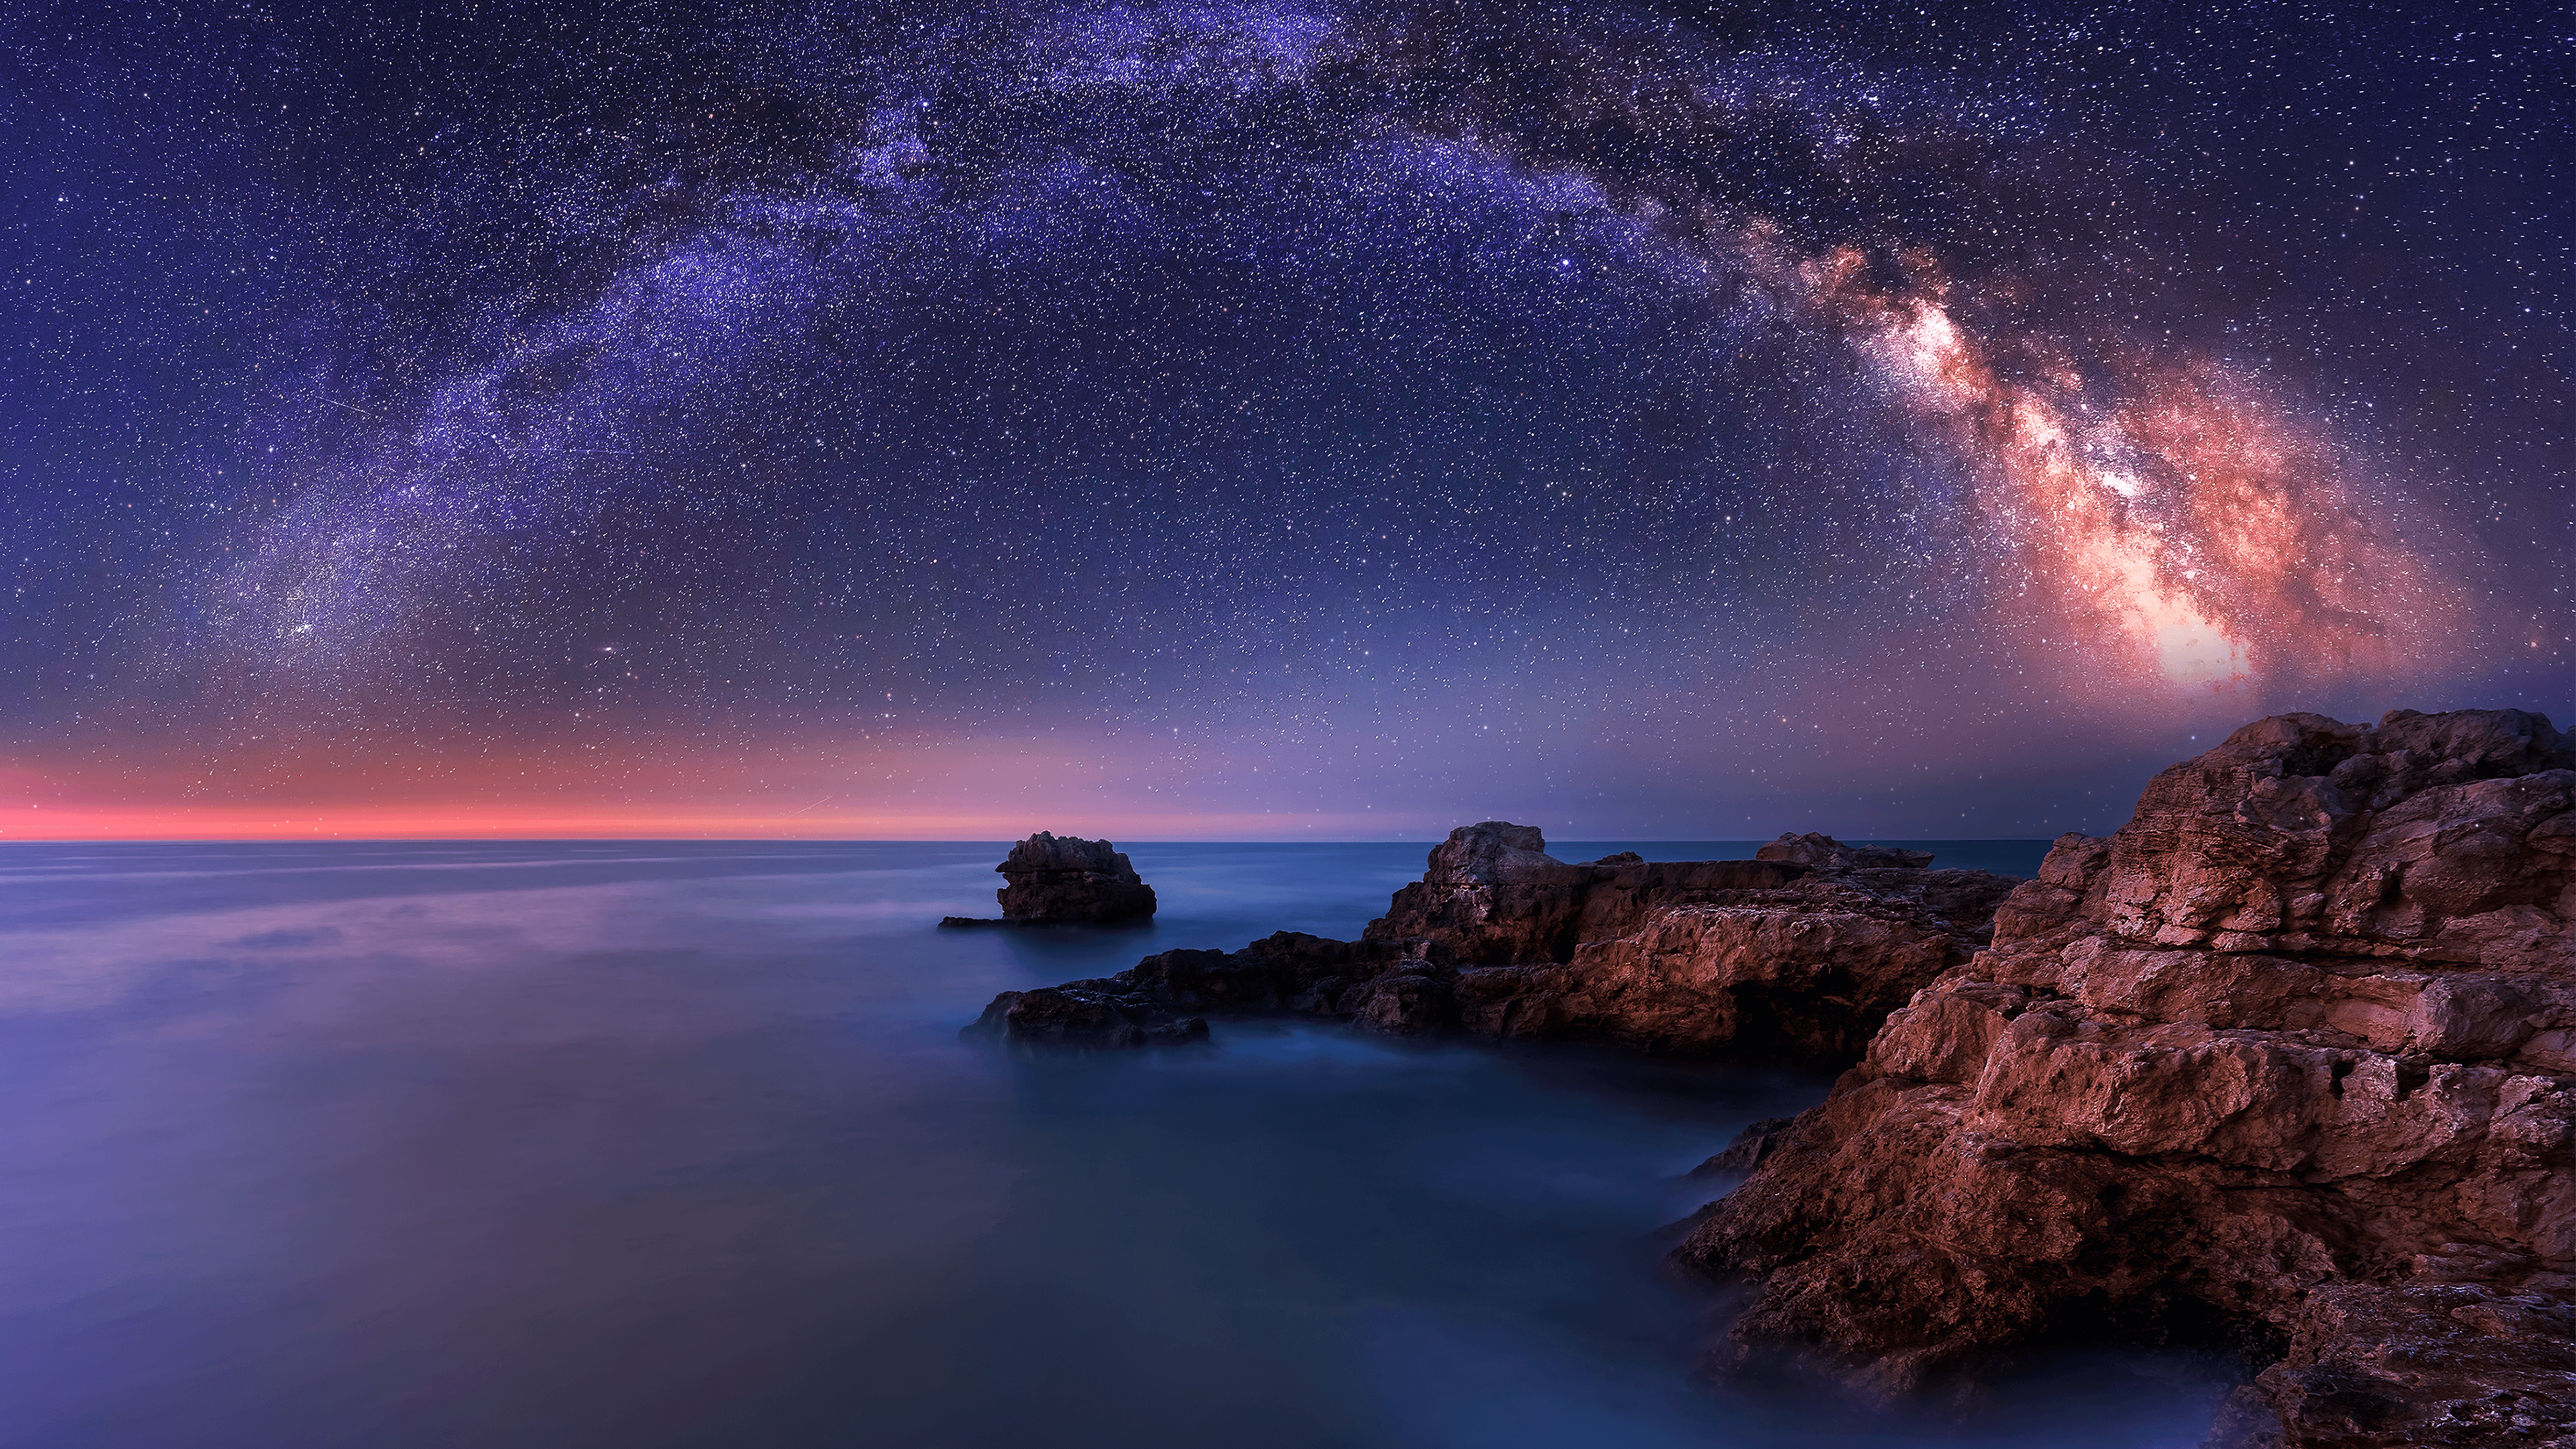 Download Free HD Milky Way Over The Sea Desktop Wallpaper In 4K .0270